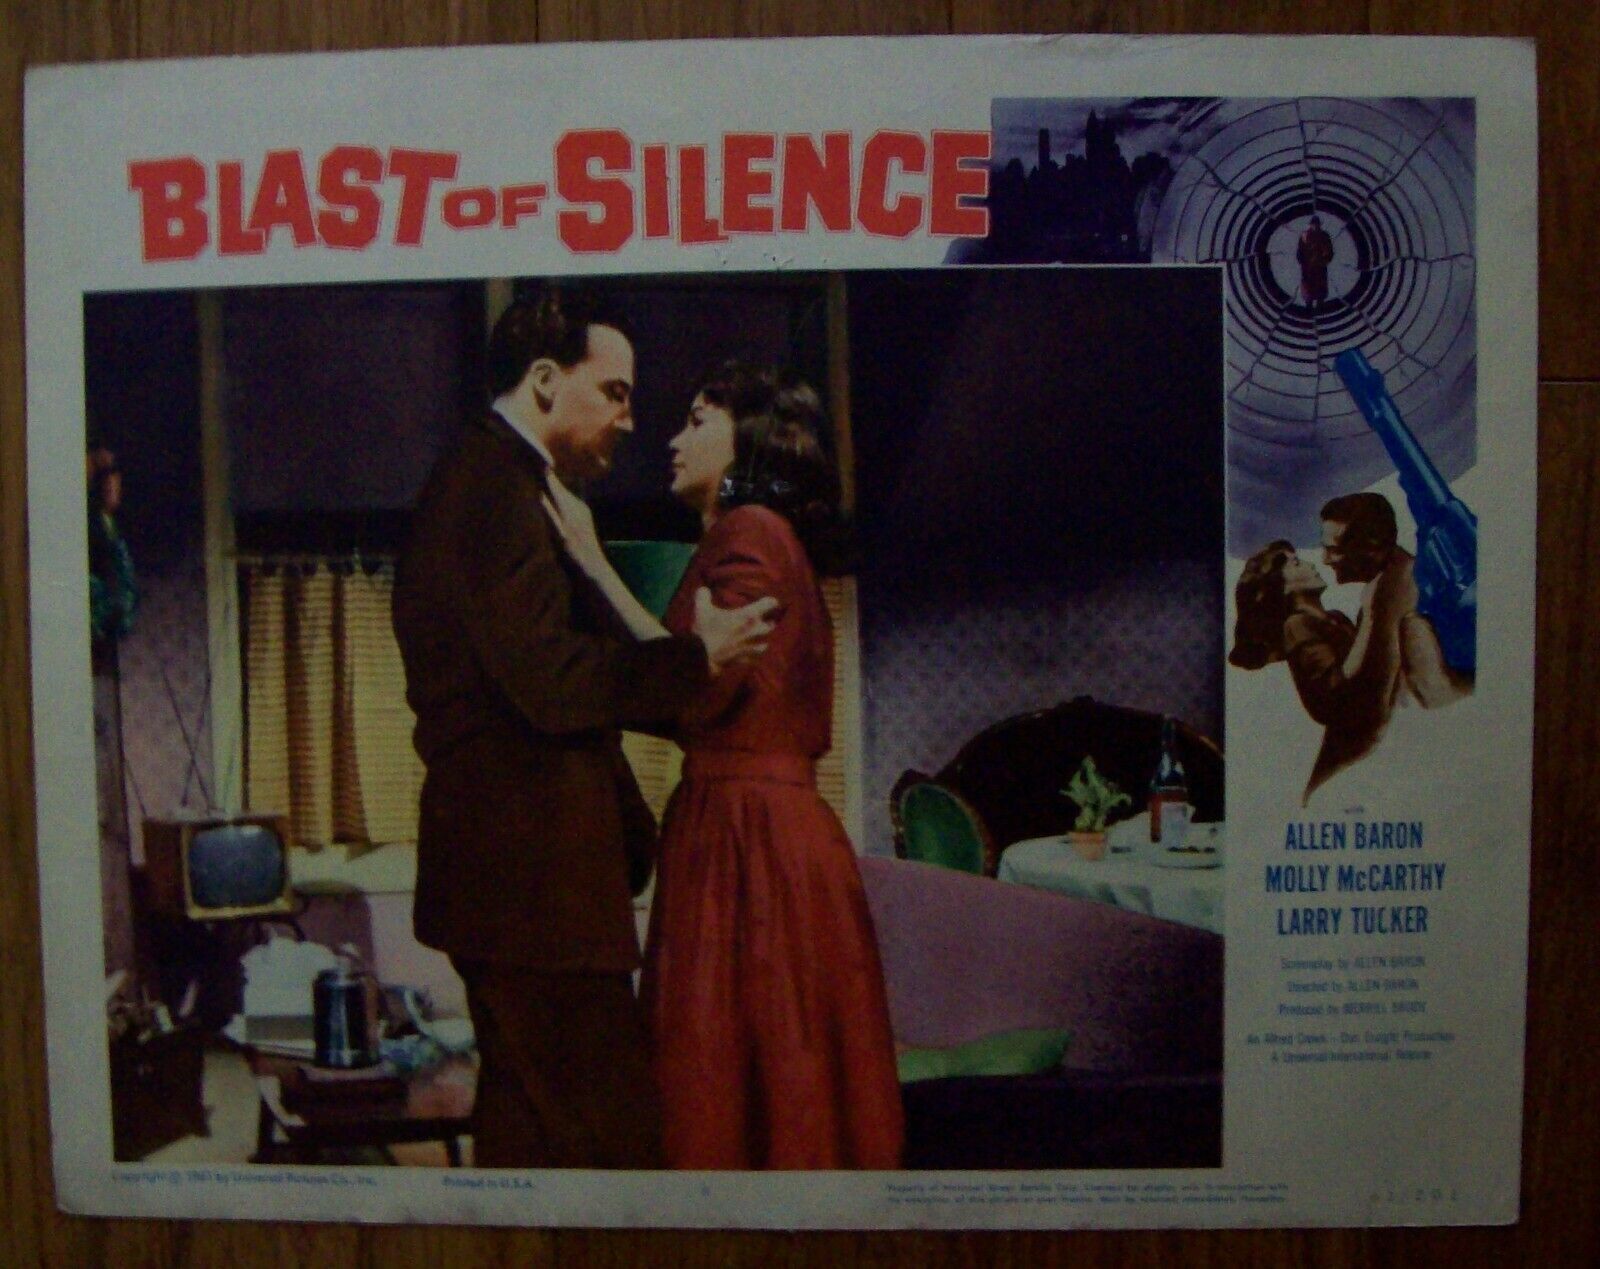 ORIGINAL, COMPLETE BLAST OF SILENCE LOBBY CARD SET. Без бренда - фотография #10